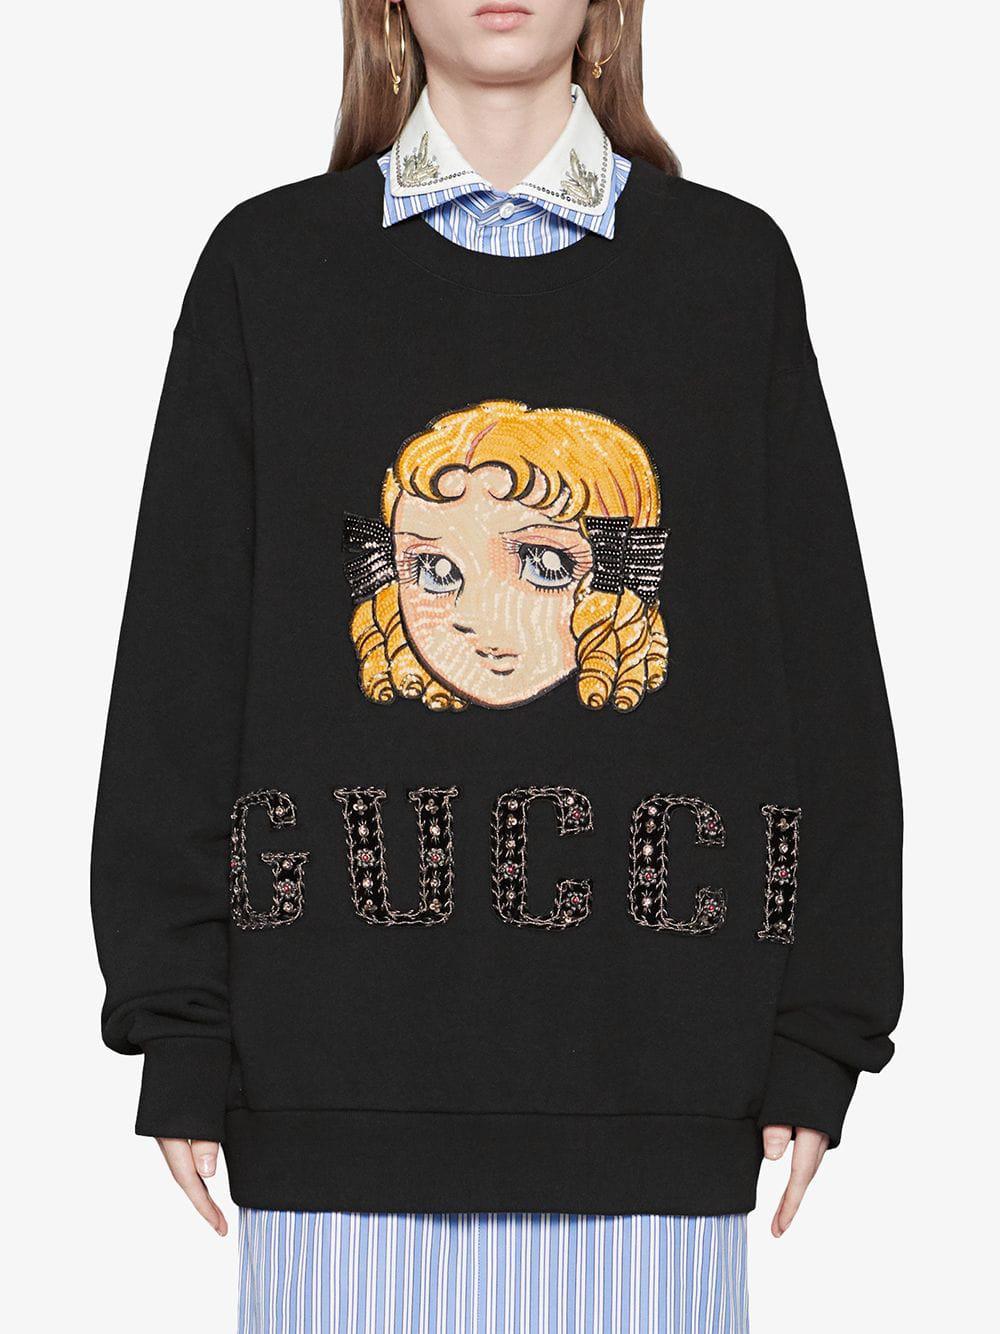 Gucci Cotton Oversize Sweatshirt With 